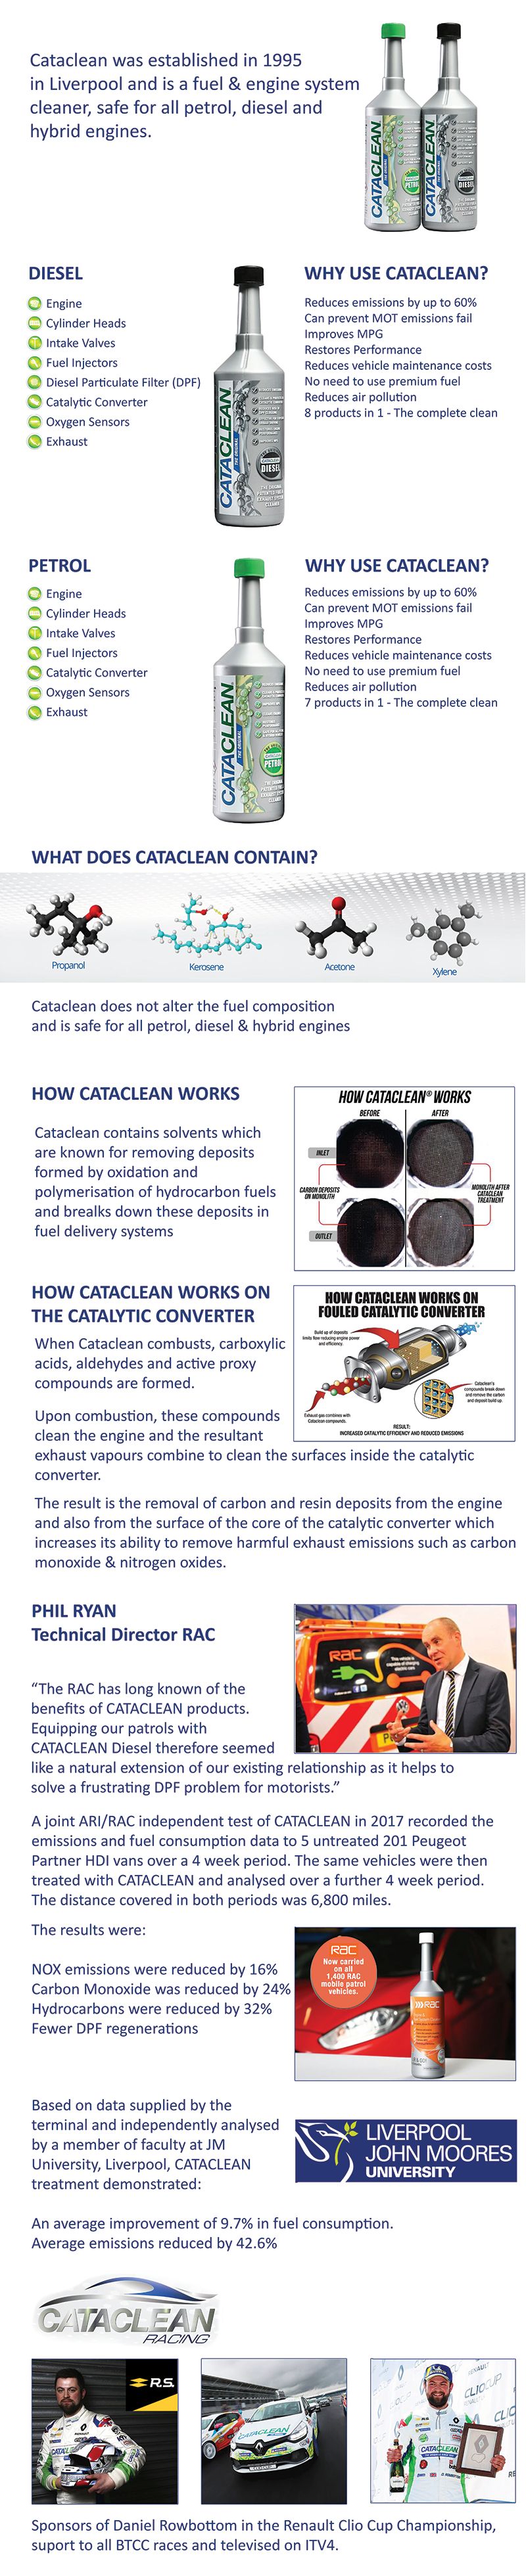 Cataclean Copy & Images Mk2.png